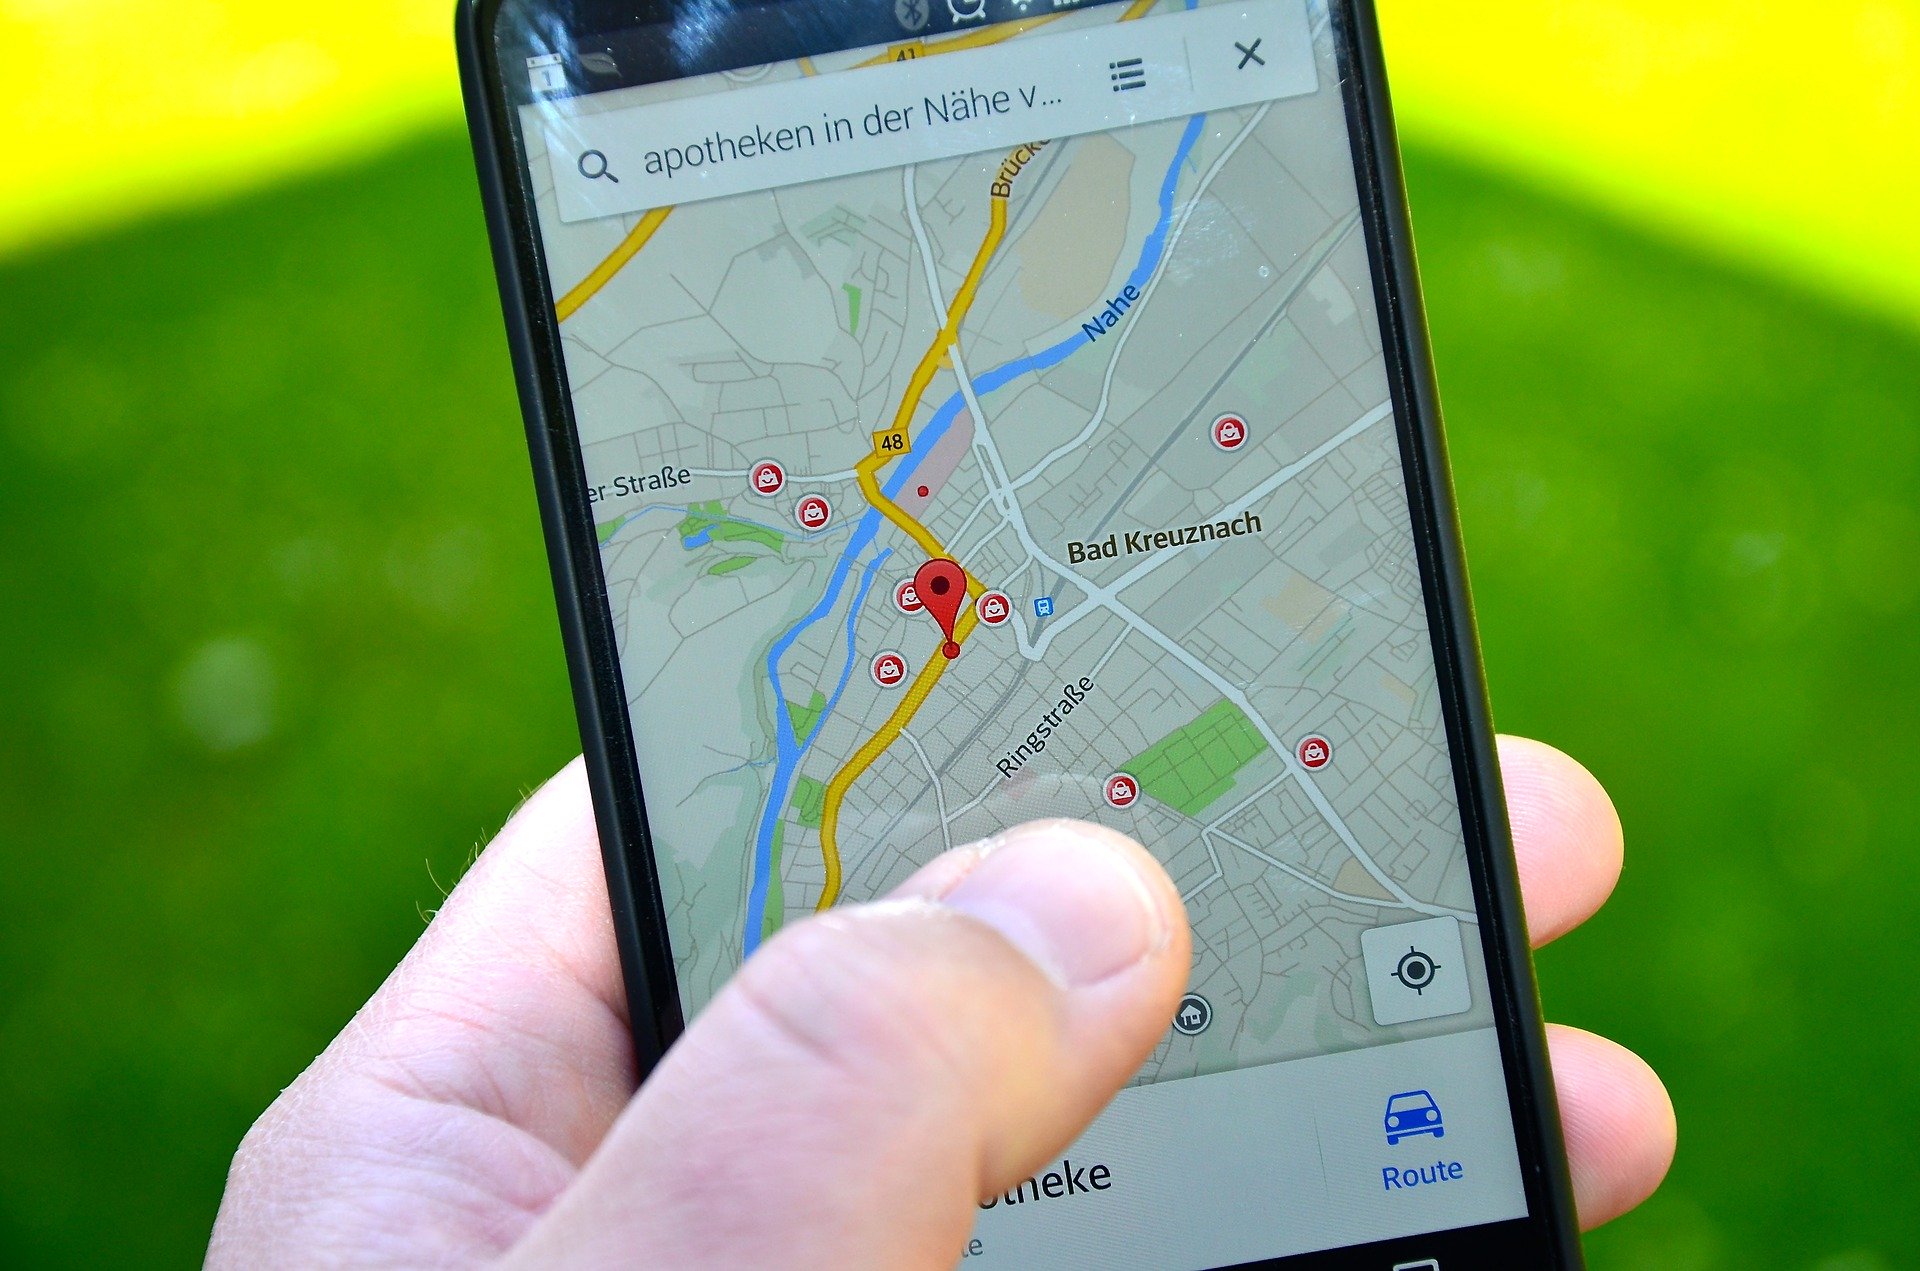 GoogleMapアプリで現在地の共有して浮気調査をしたい！方法と注意点とは？